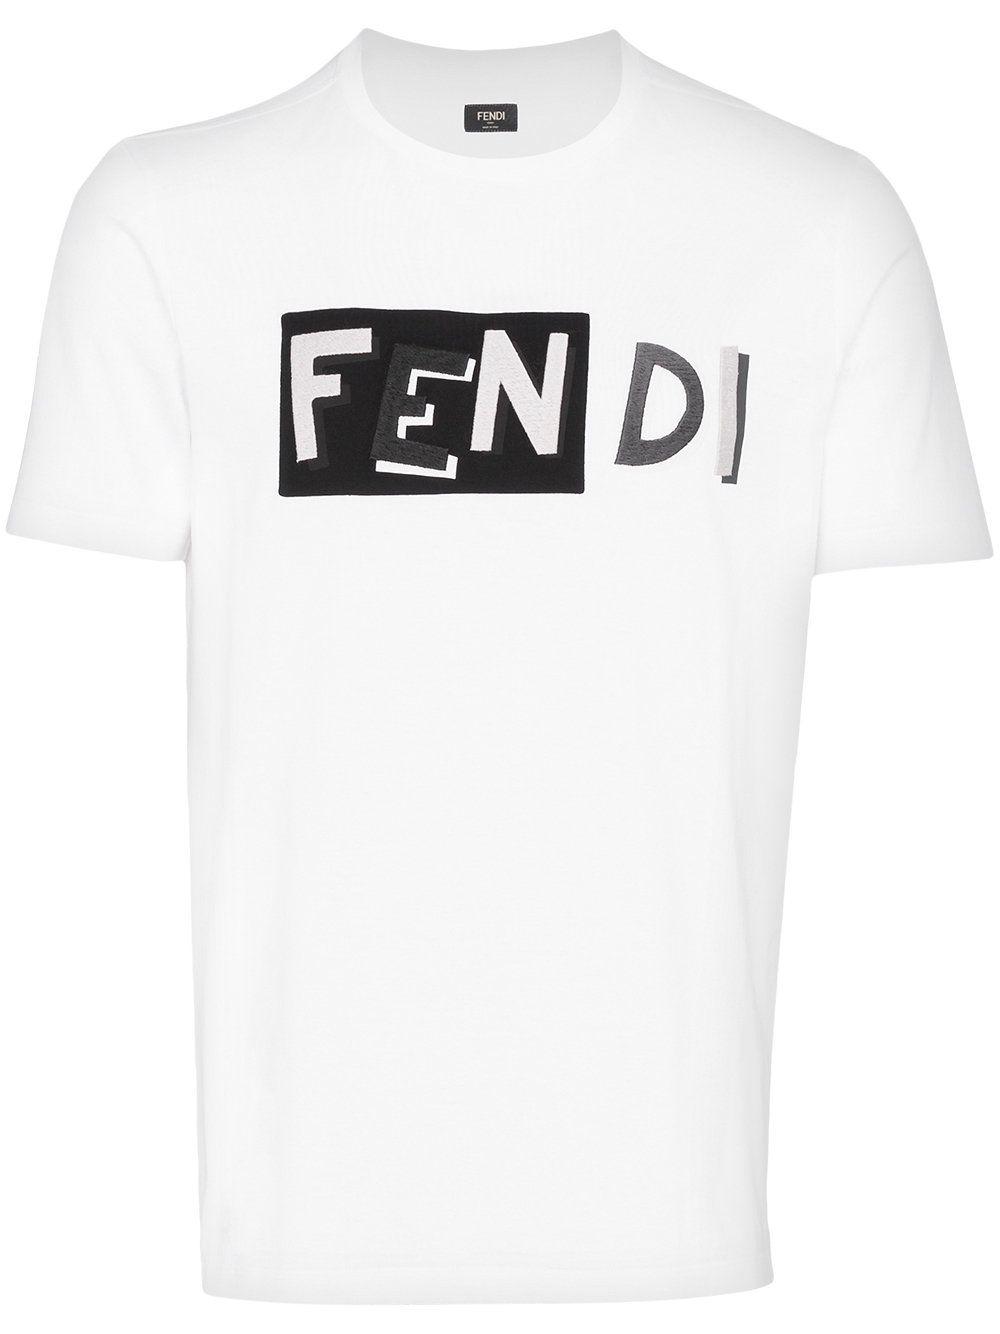 White Letter Logo - Fendi Roundneck t shirt with white letter logo front. style board